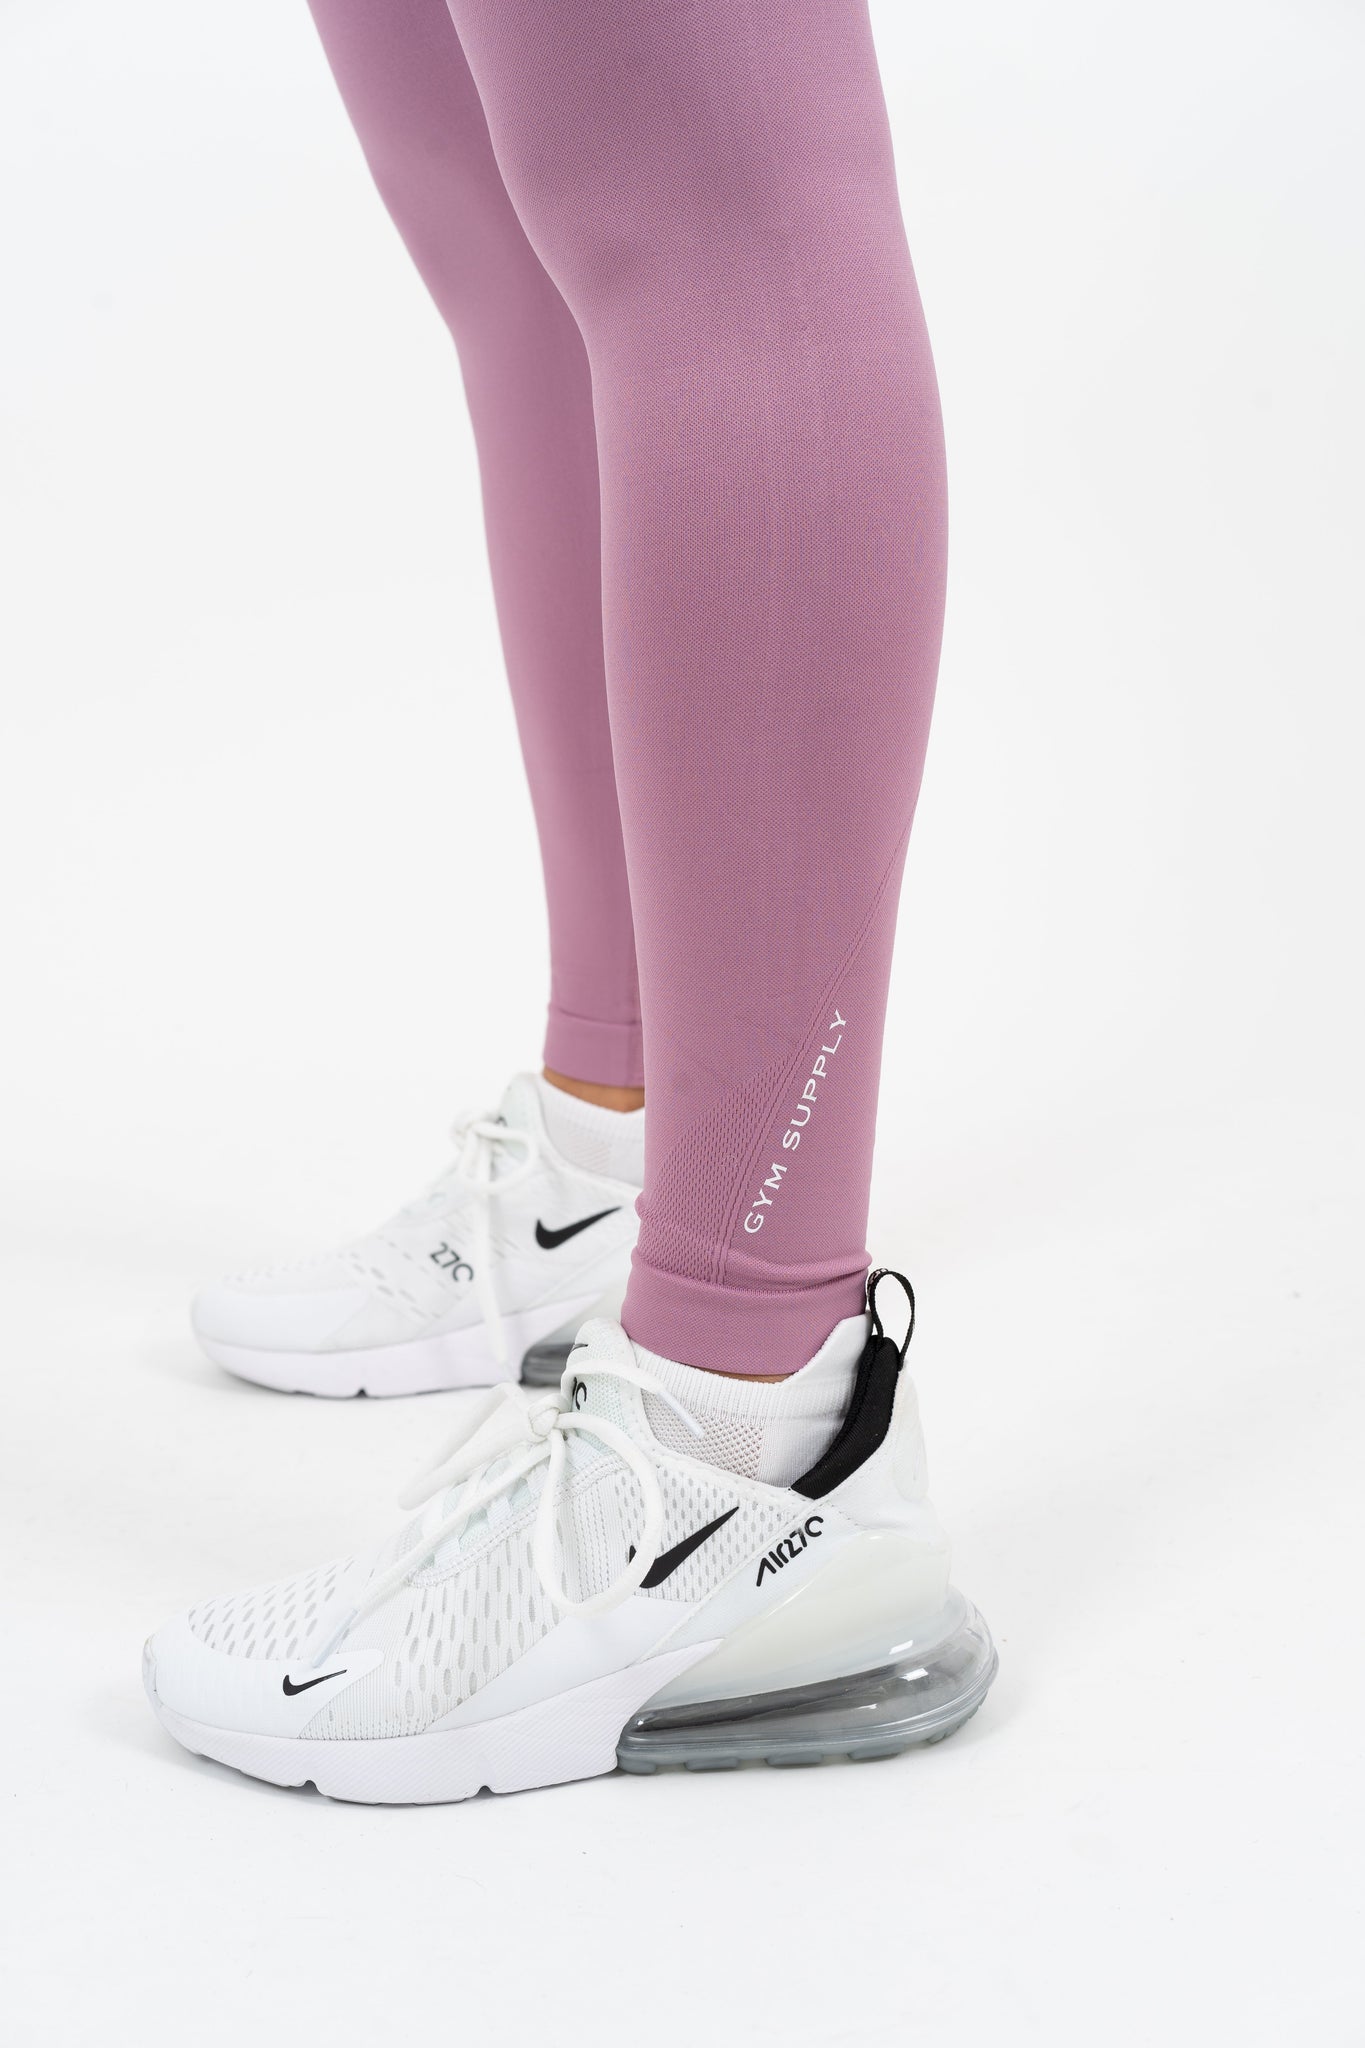 Icon Seamless Leggings - Pink - Gymsupply